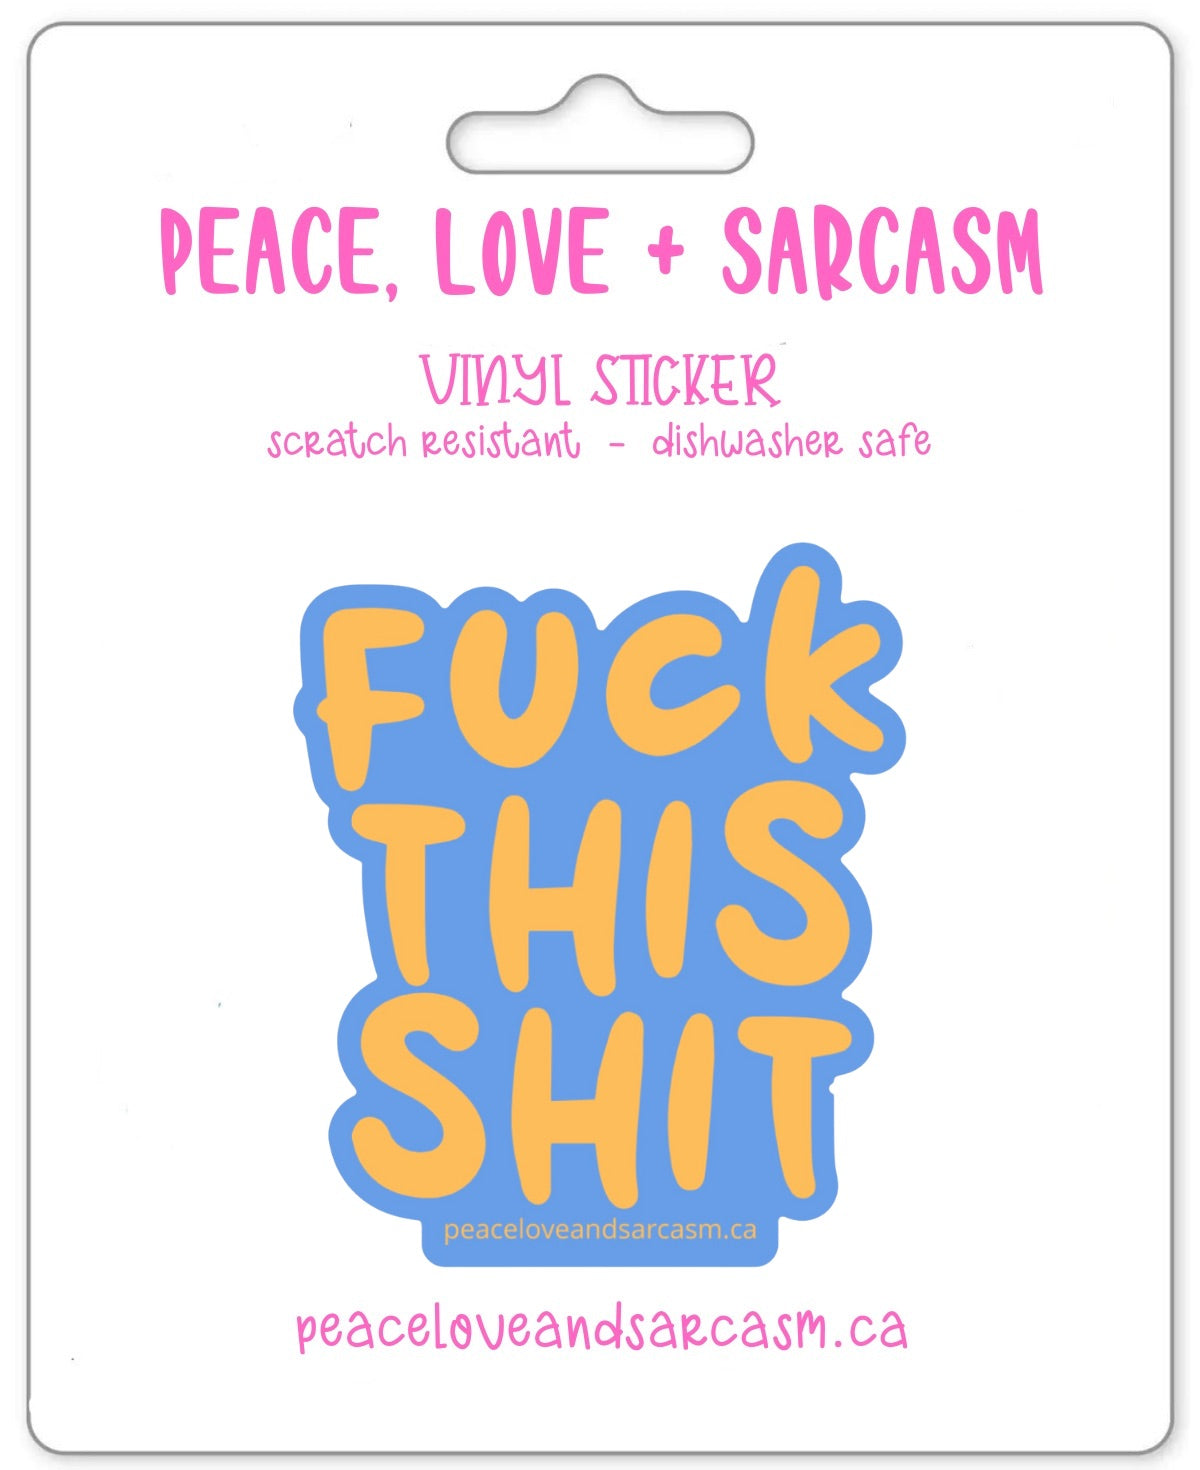 Fuck this Shit Sticker